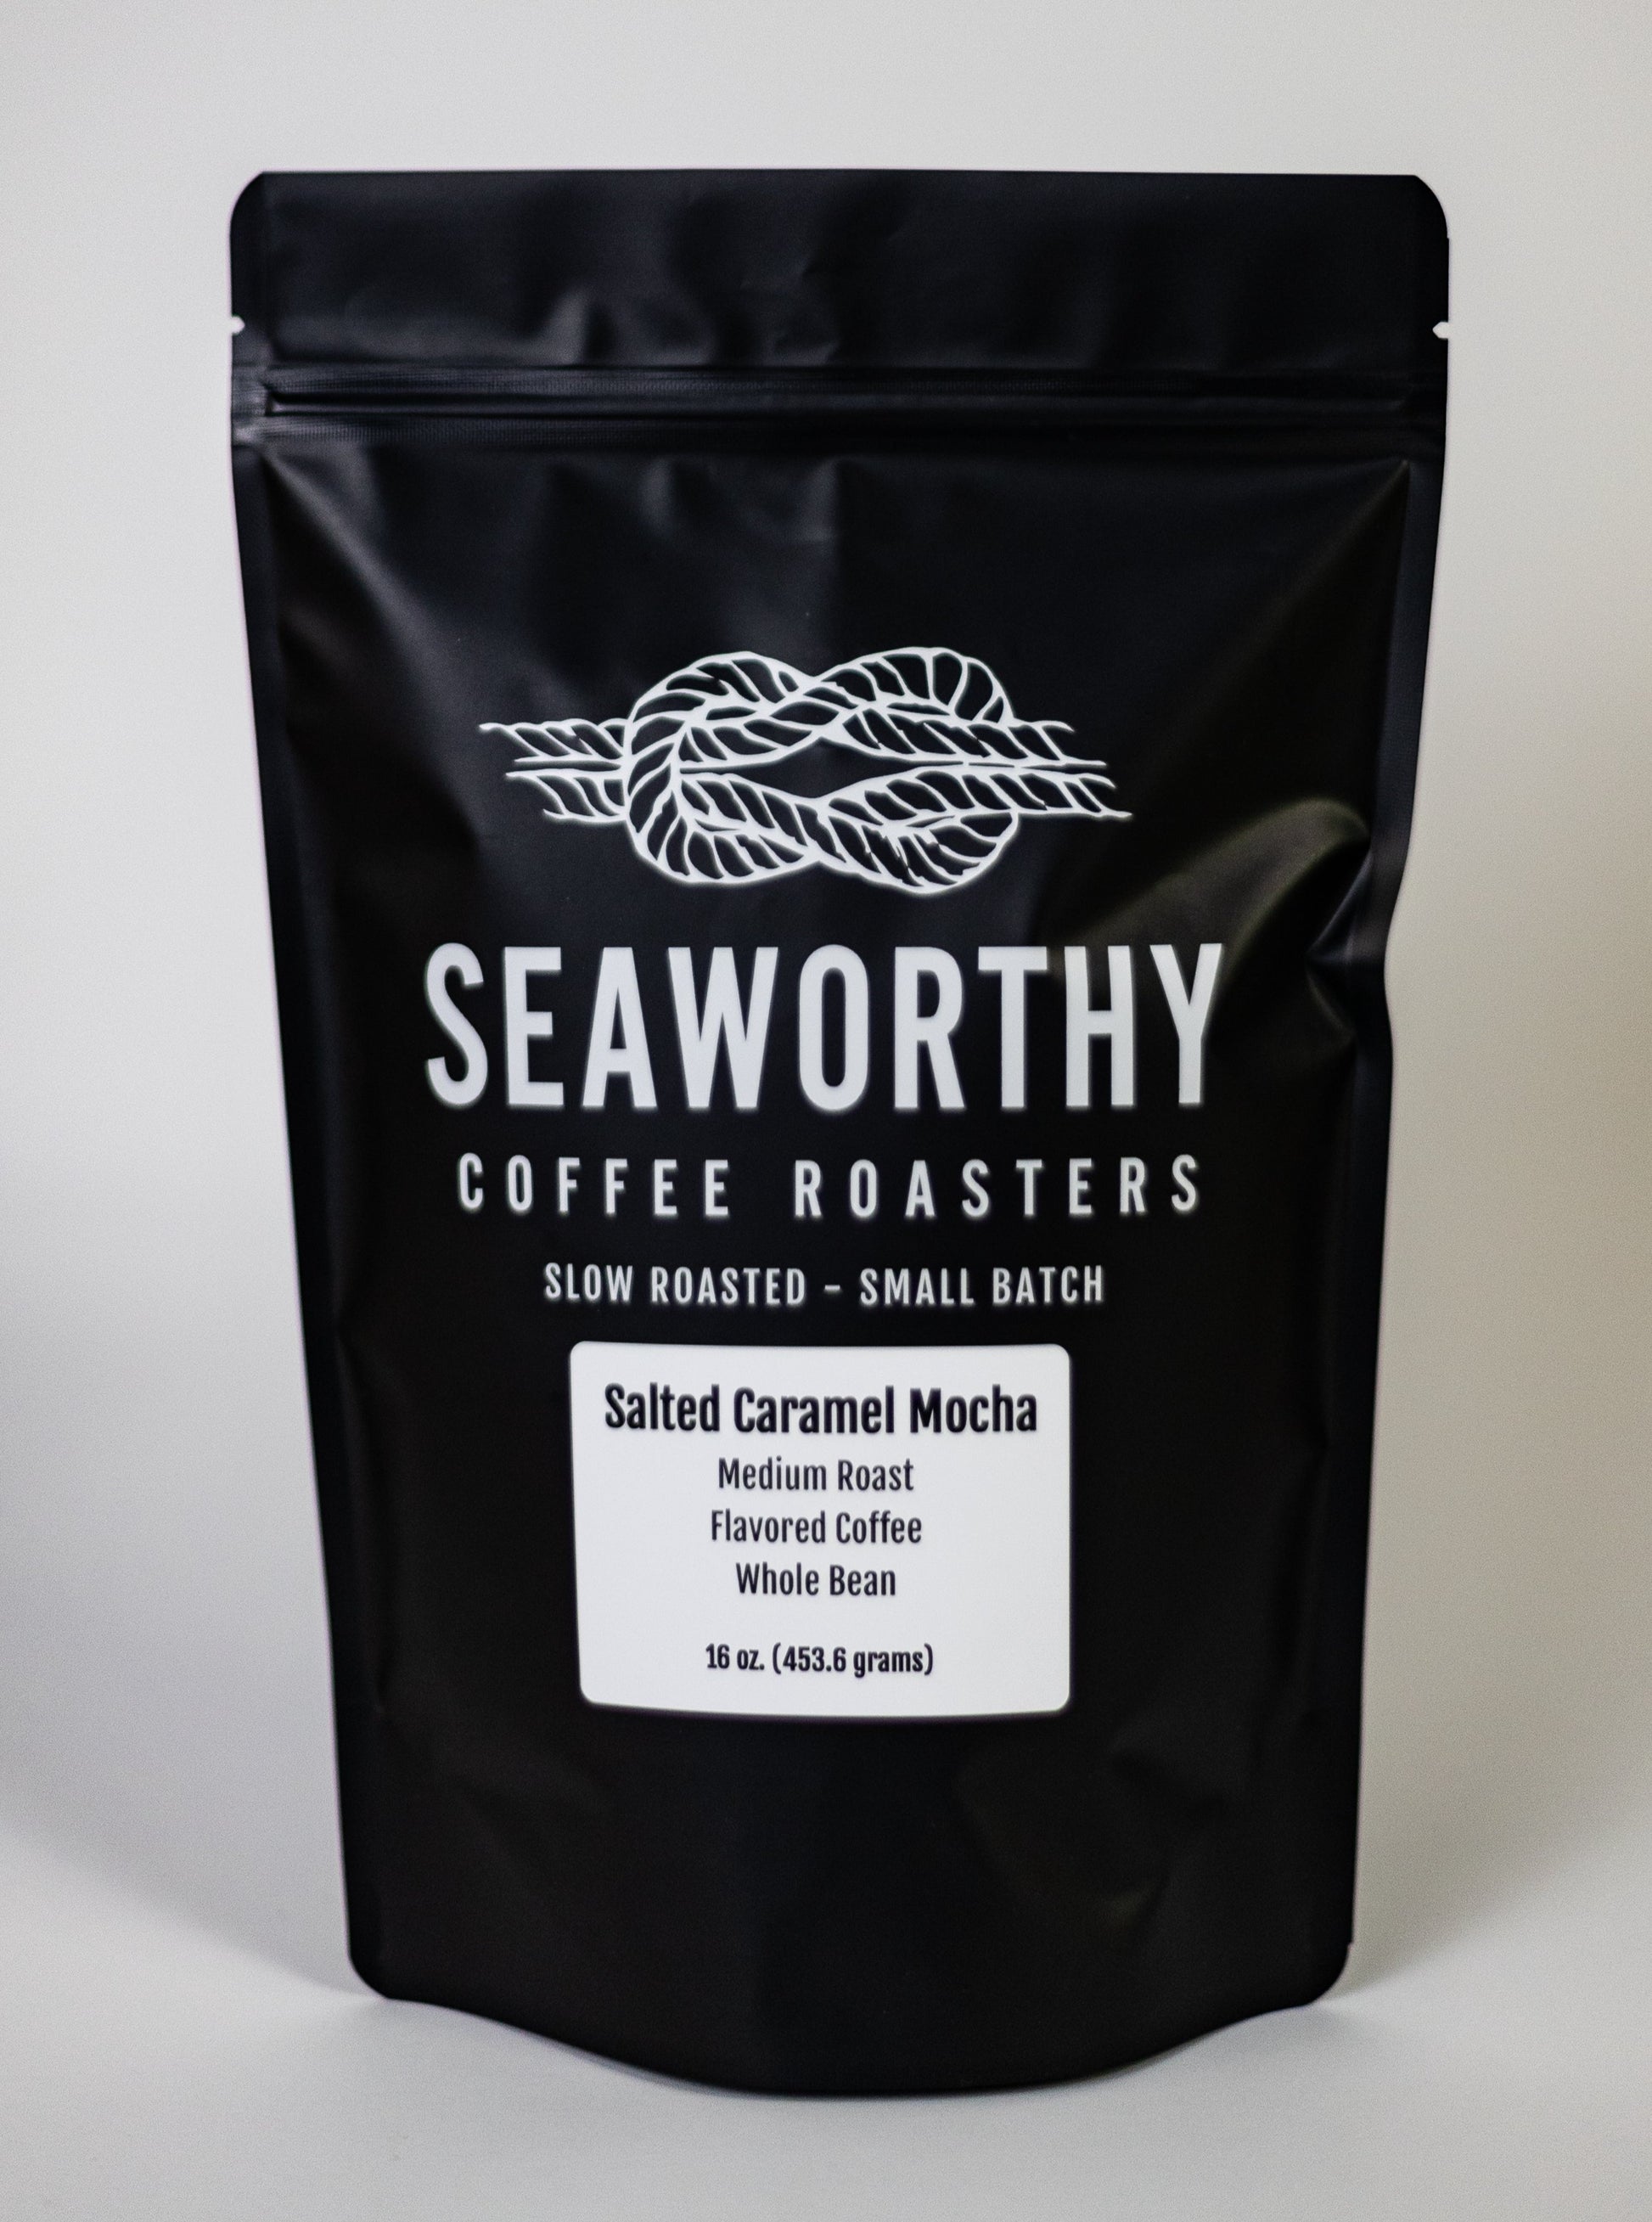 Seaworthy slow roasted, small batch, low acid coffee. 1 pound bag of Salted Caramel Mocha flavored coffee.